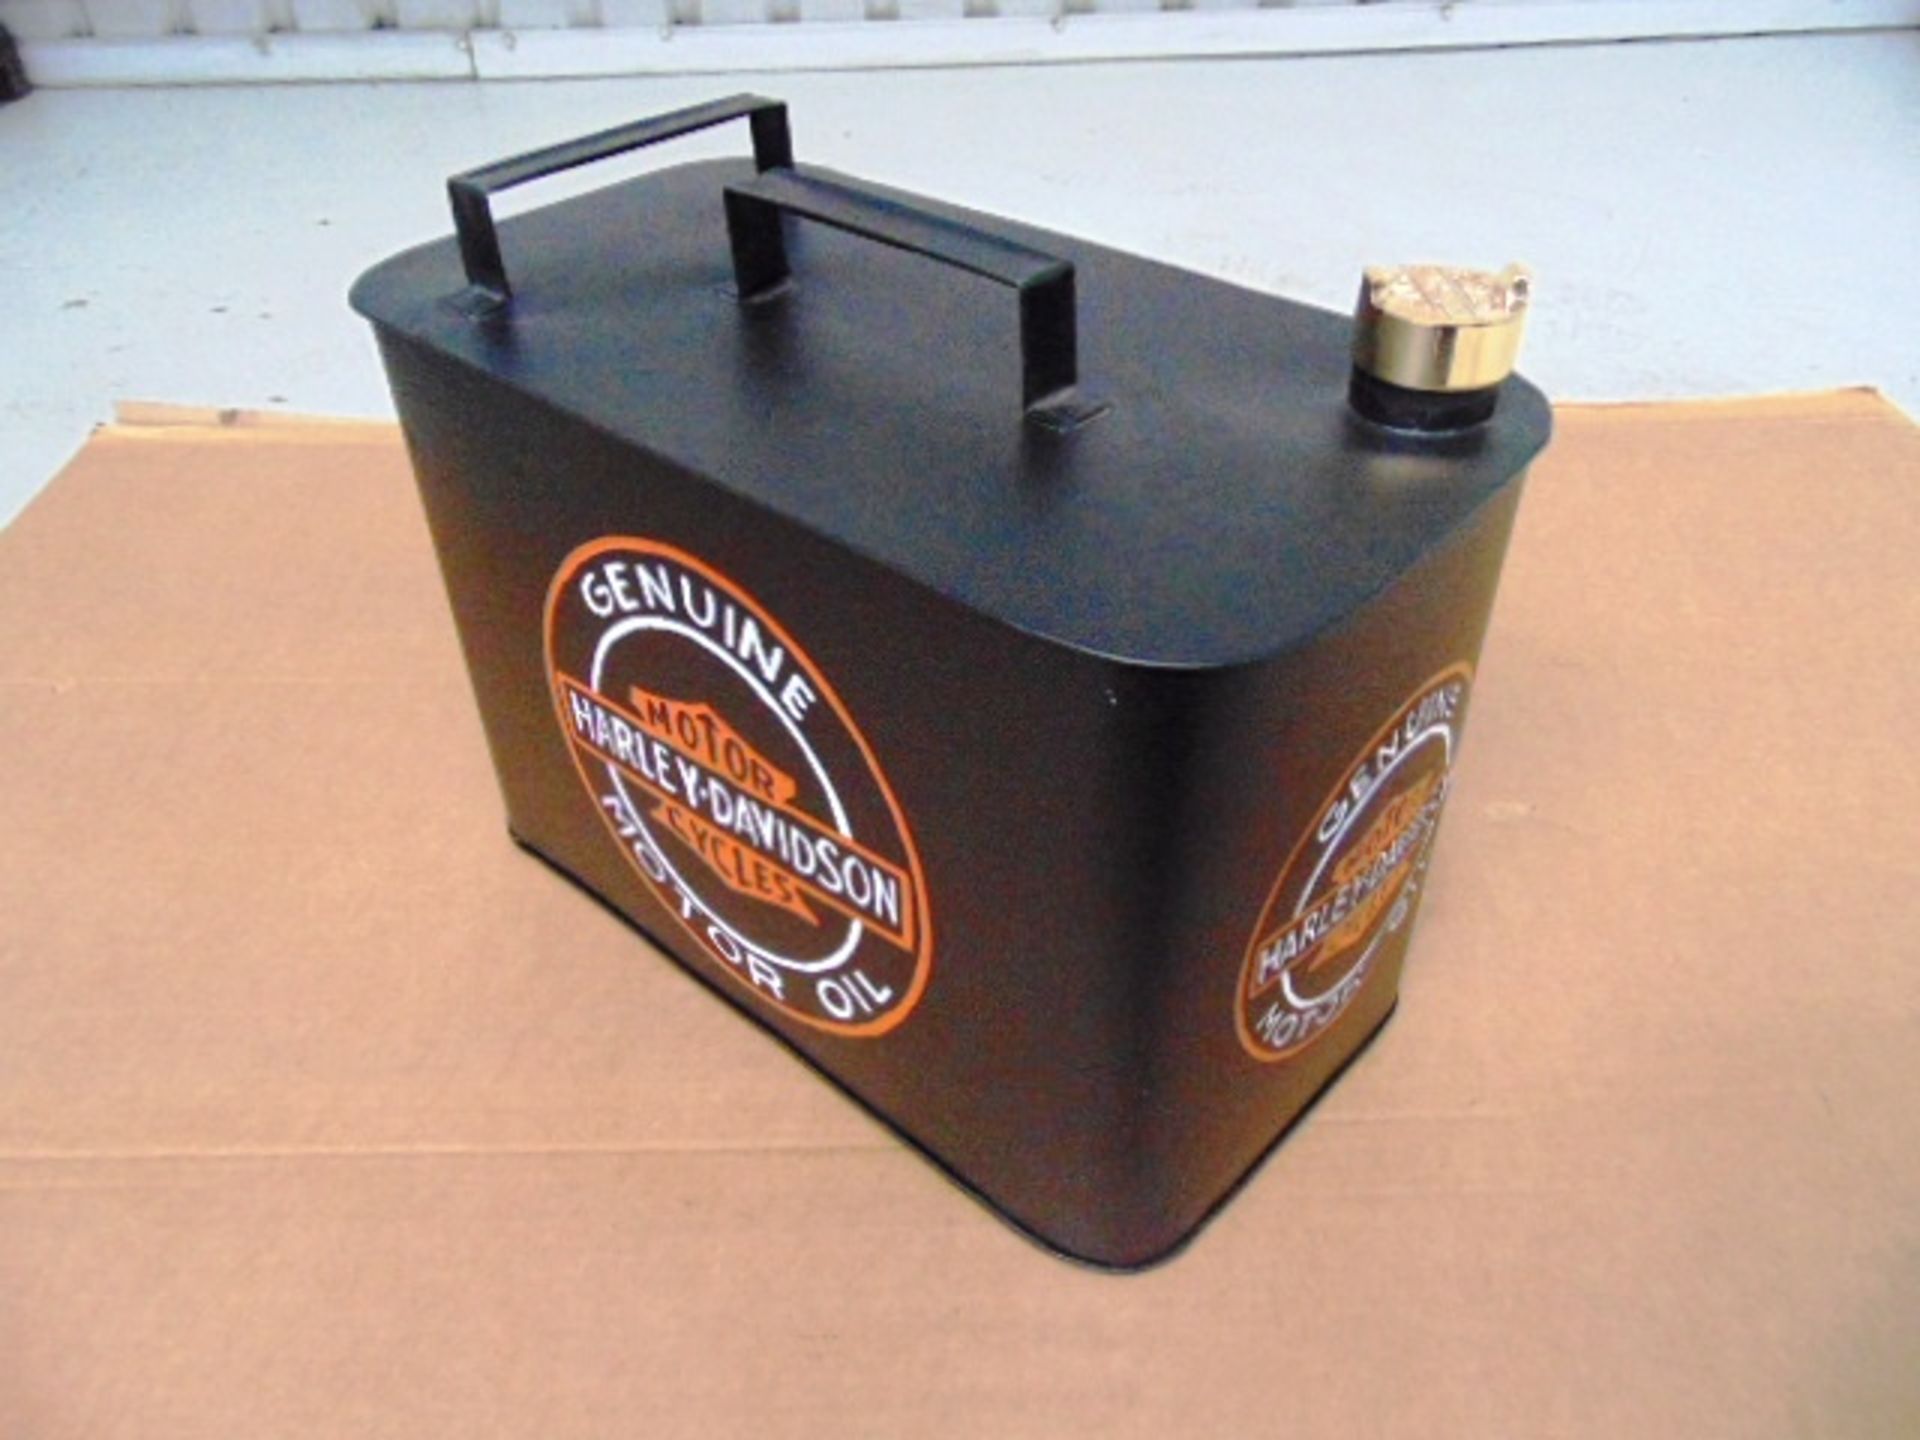 Harley Davidson Branded Oil Can